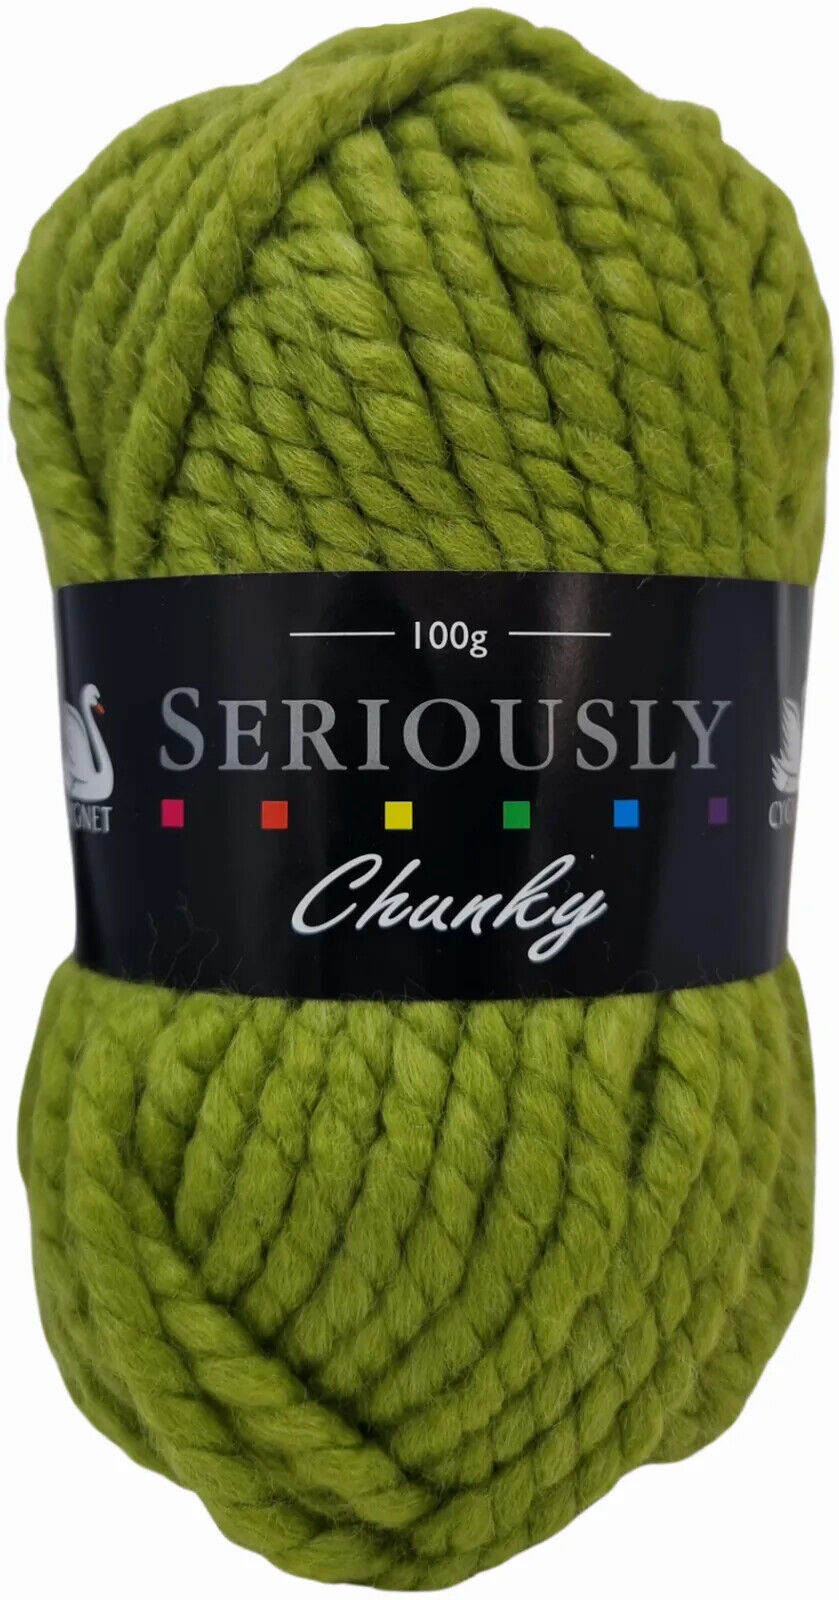 Cygnet SERIOUSLY CHUNKY Plains - Meadow Green 3877 Knitting Yarn